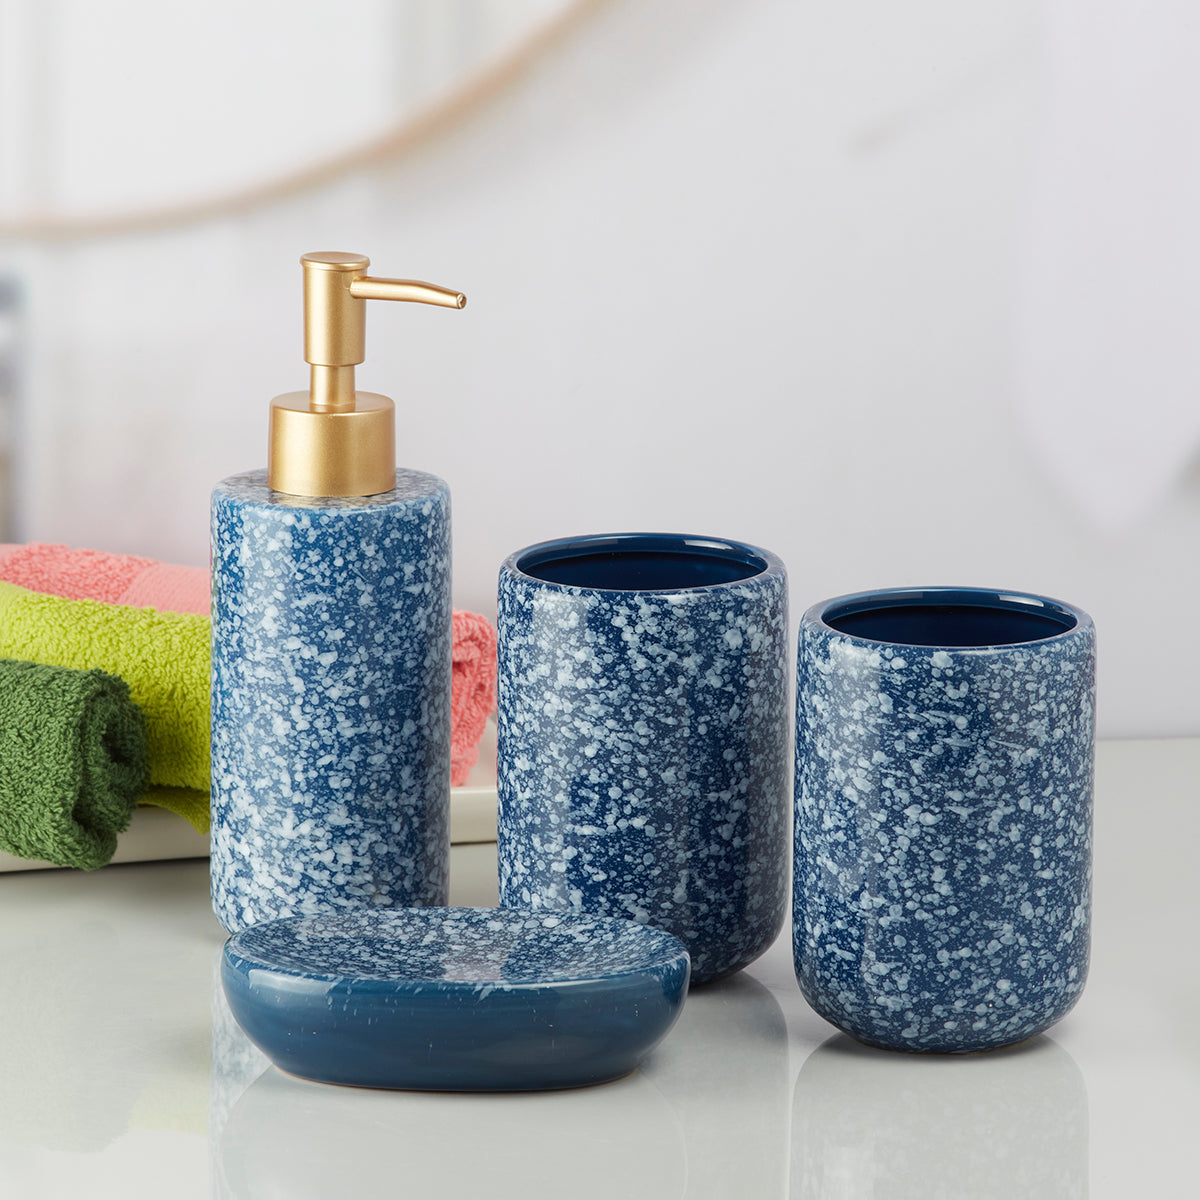 Ceramic Bathroom Accessories Set of 4 Bath Set with Soap Dispenser (10088)